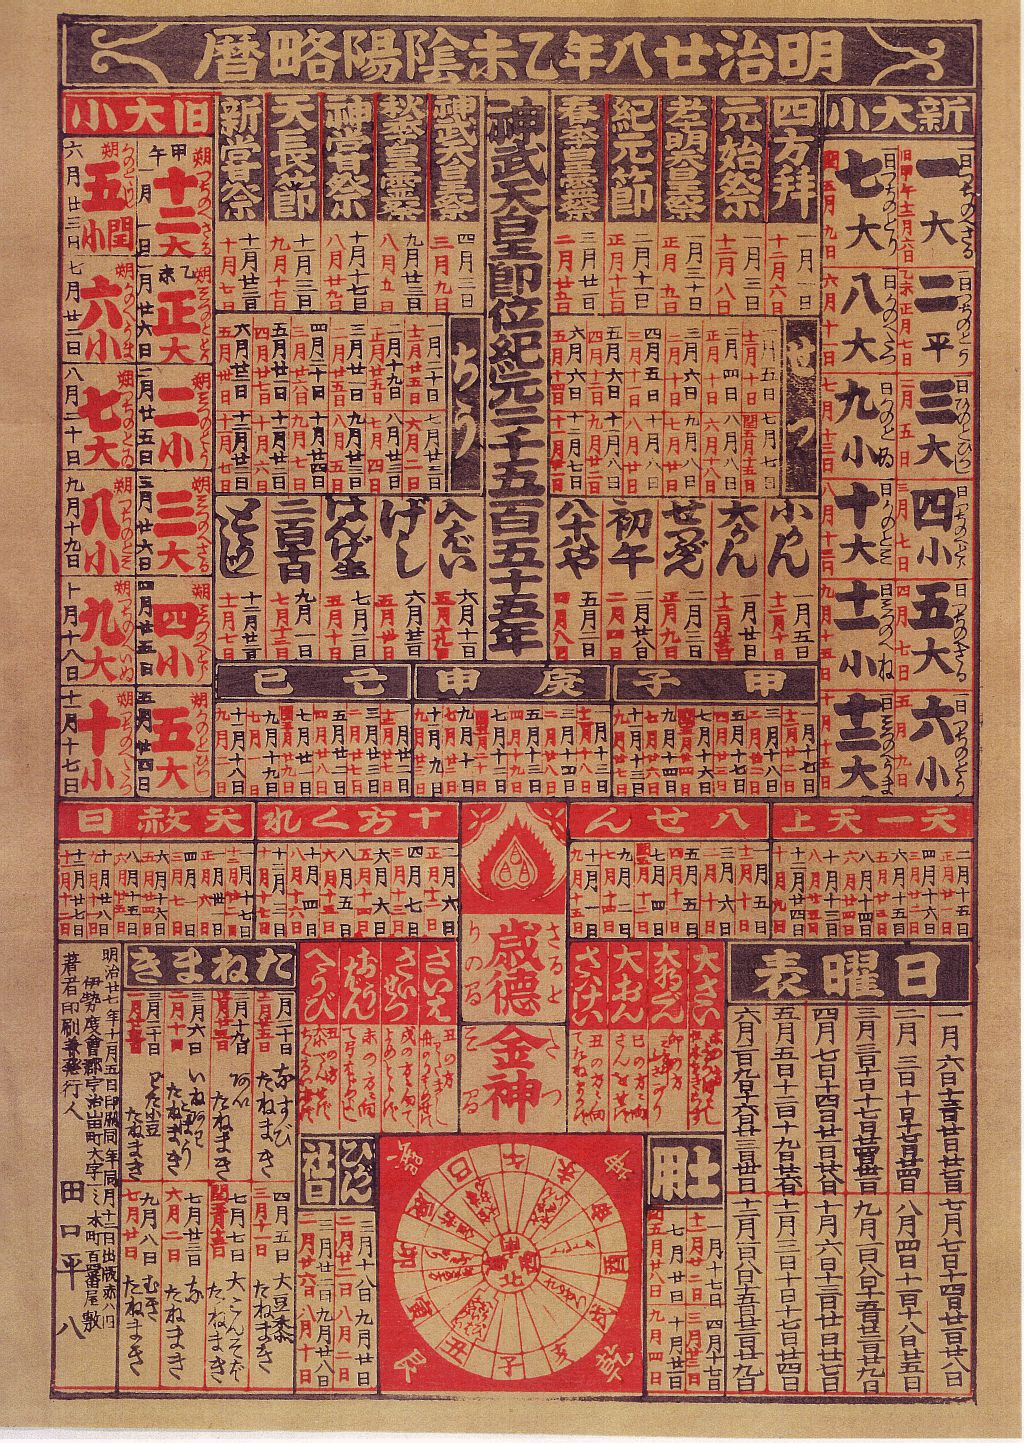 Lunar-solar calendar of 1895